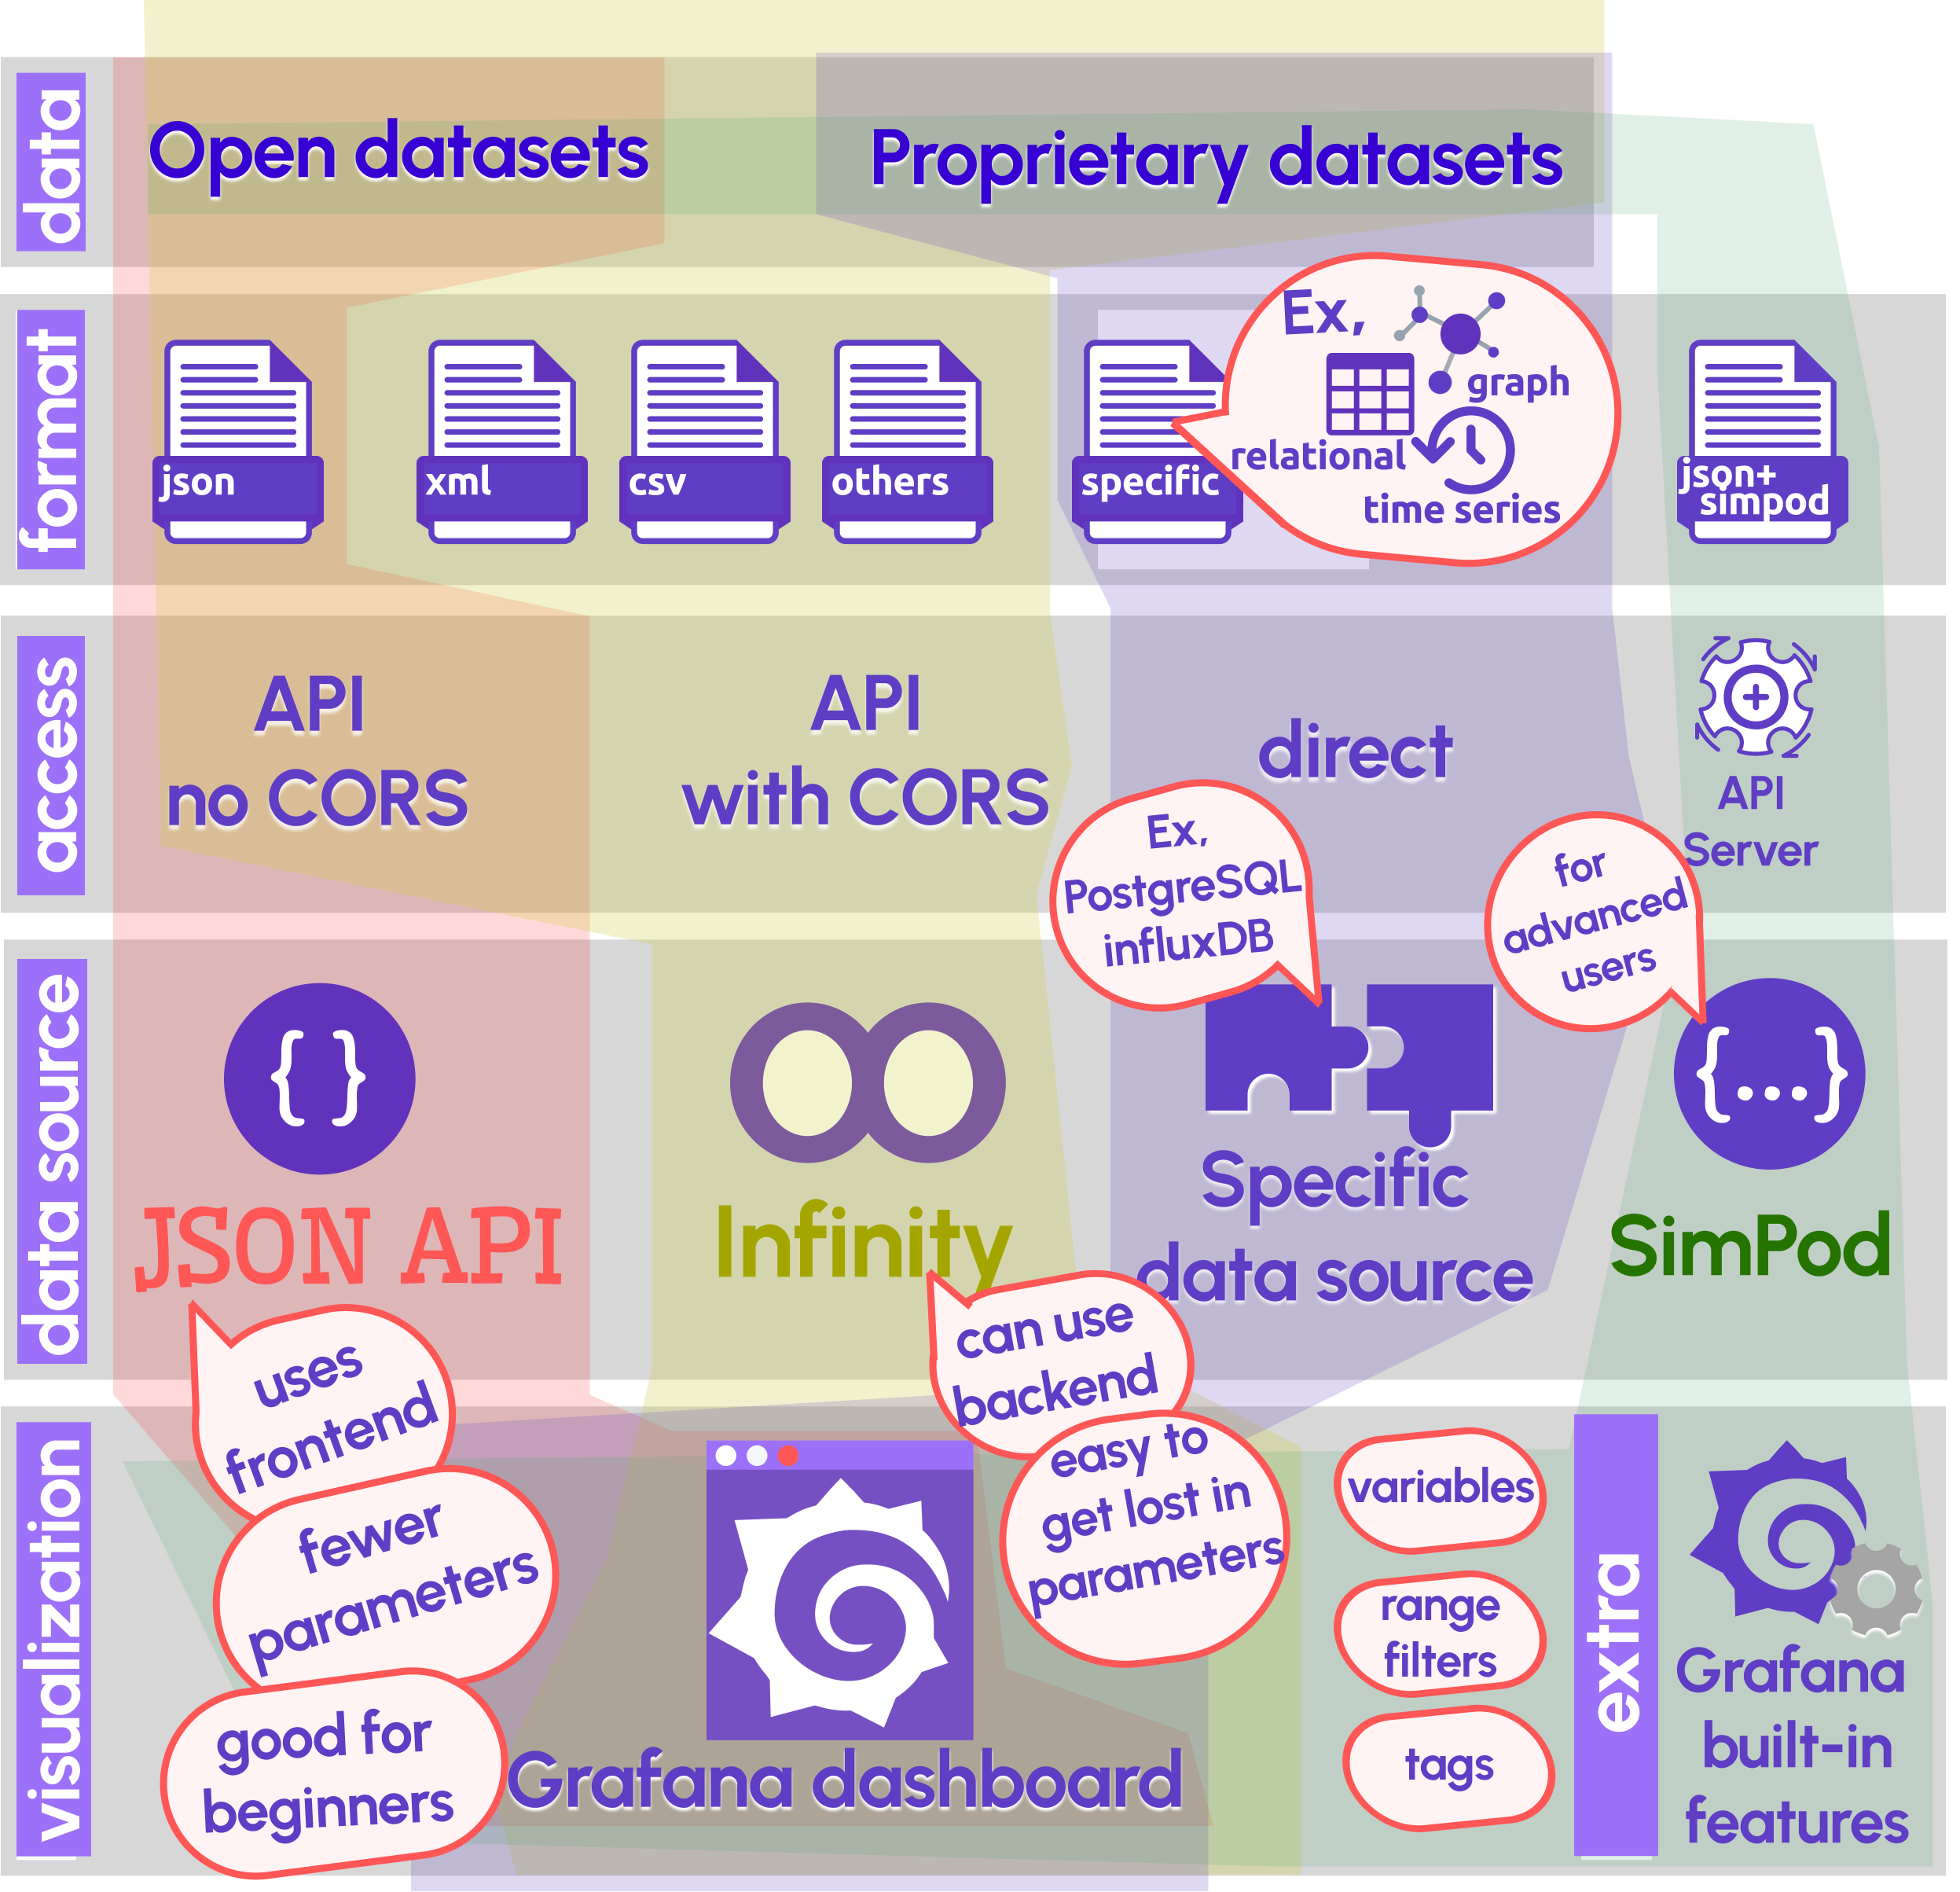 JSON API Data Sources schema summarizes the comparative analysis.